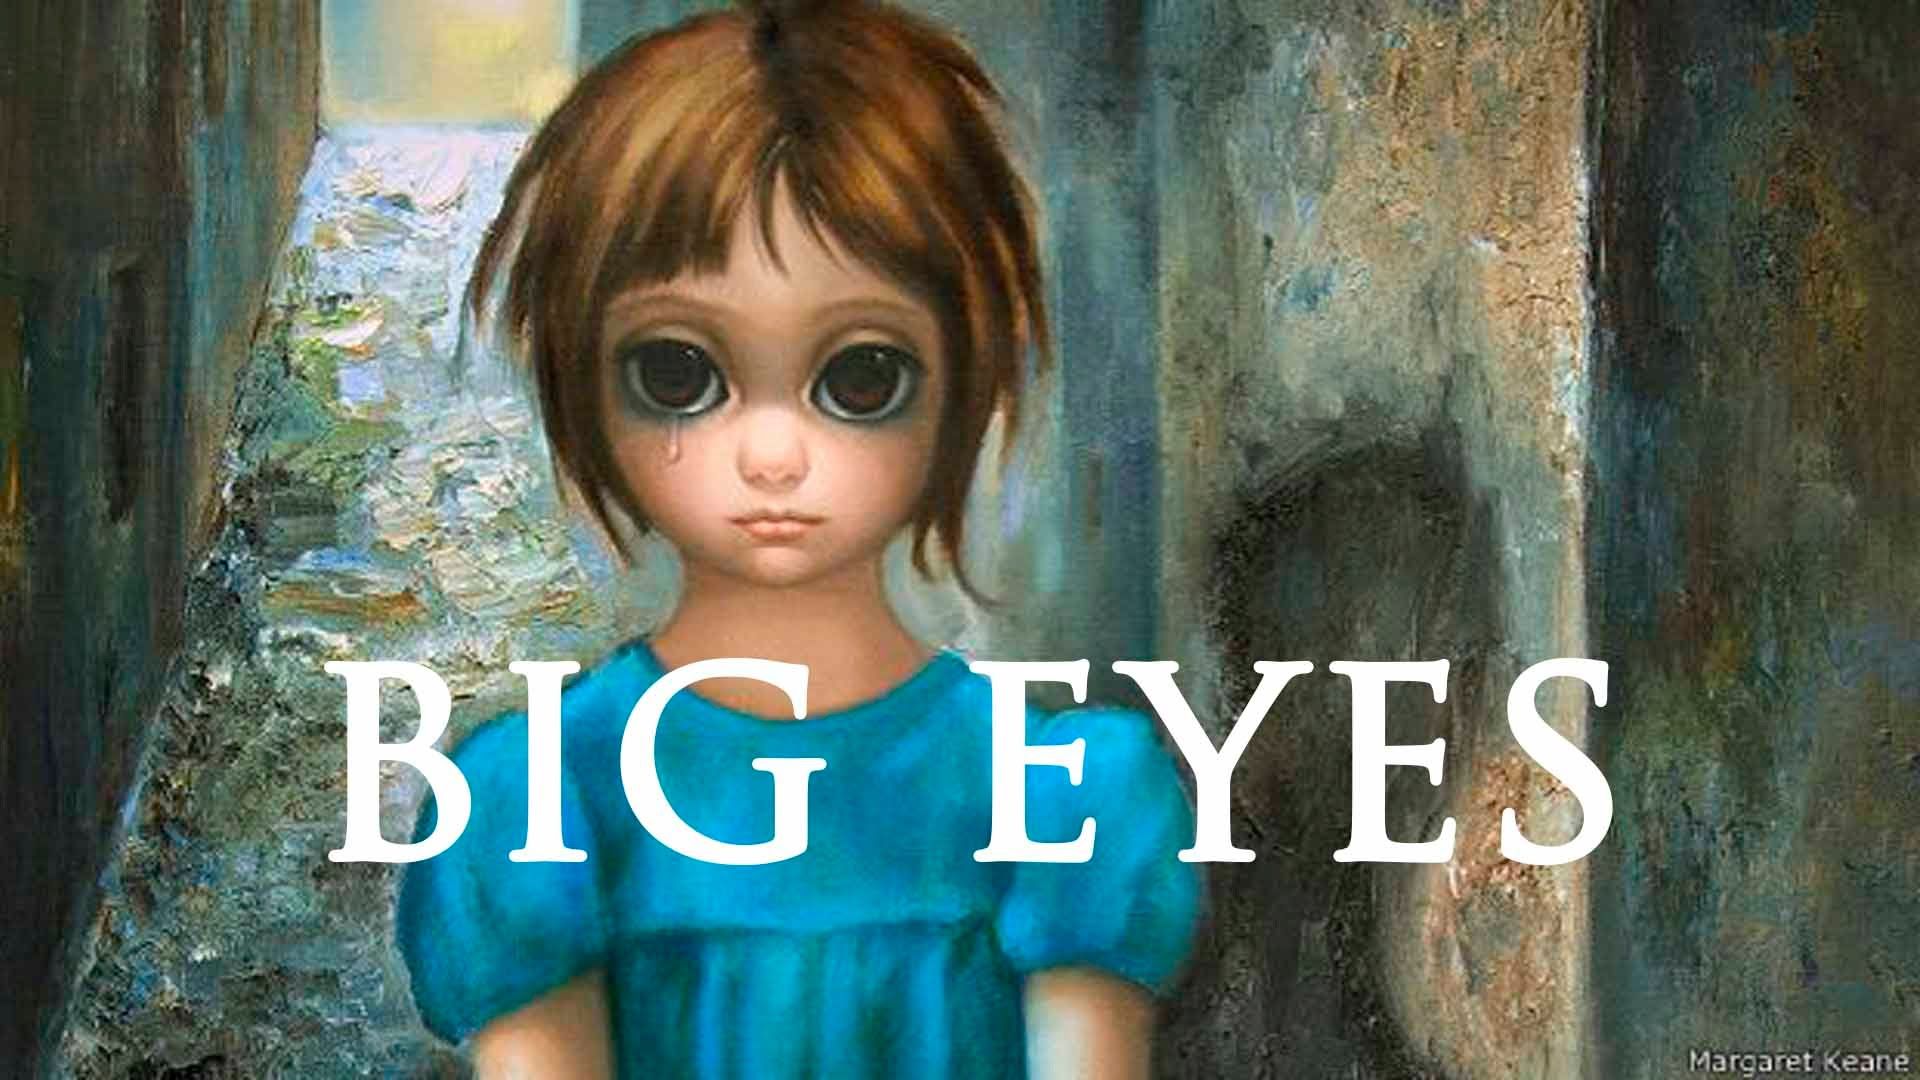 Big Eyes wallpaper, Movie, HQ Big Eyes pictureK Wallpaper 2019